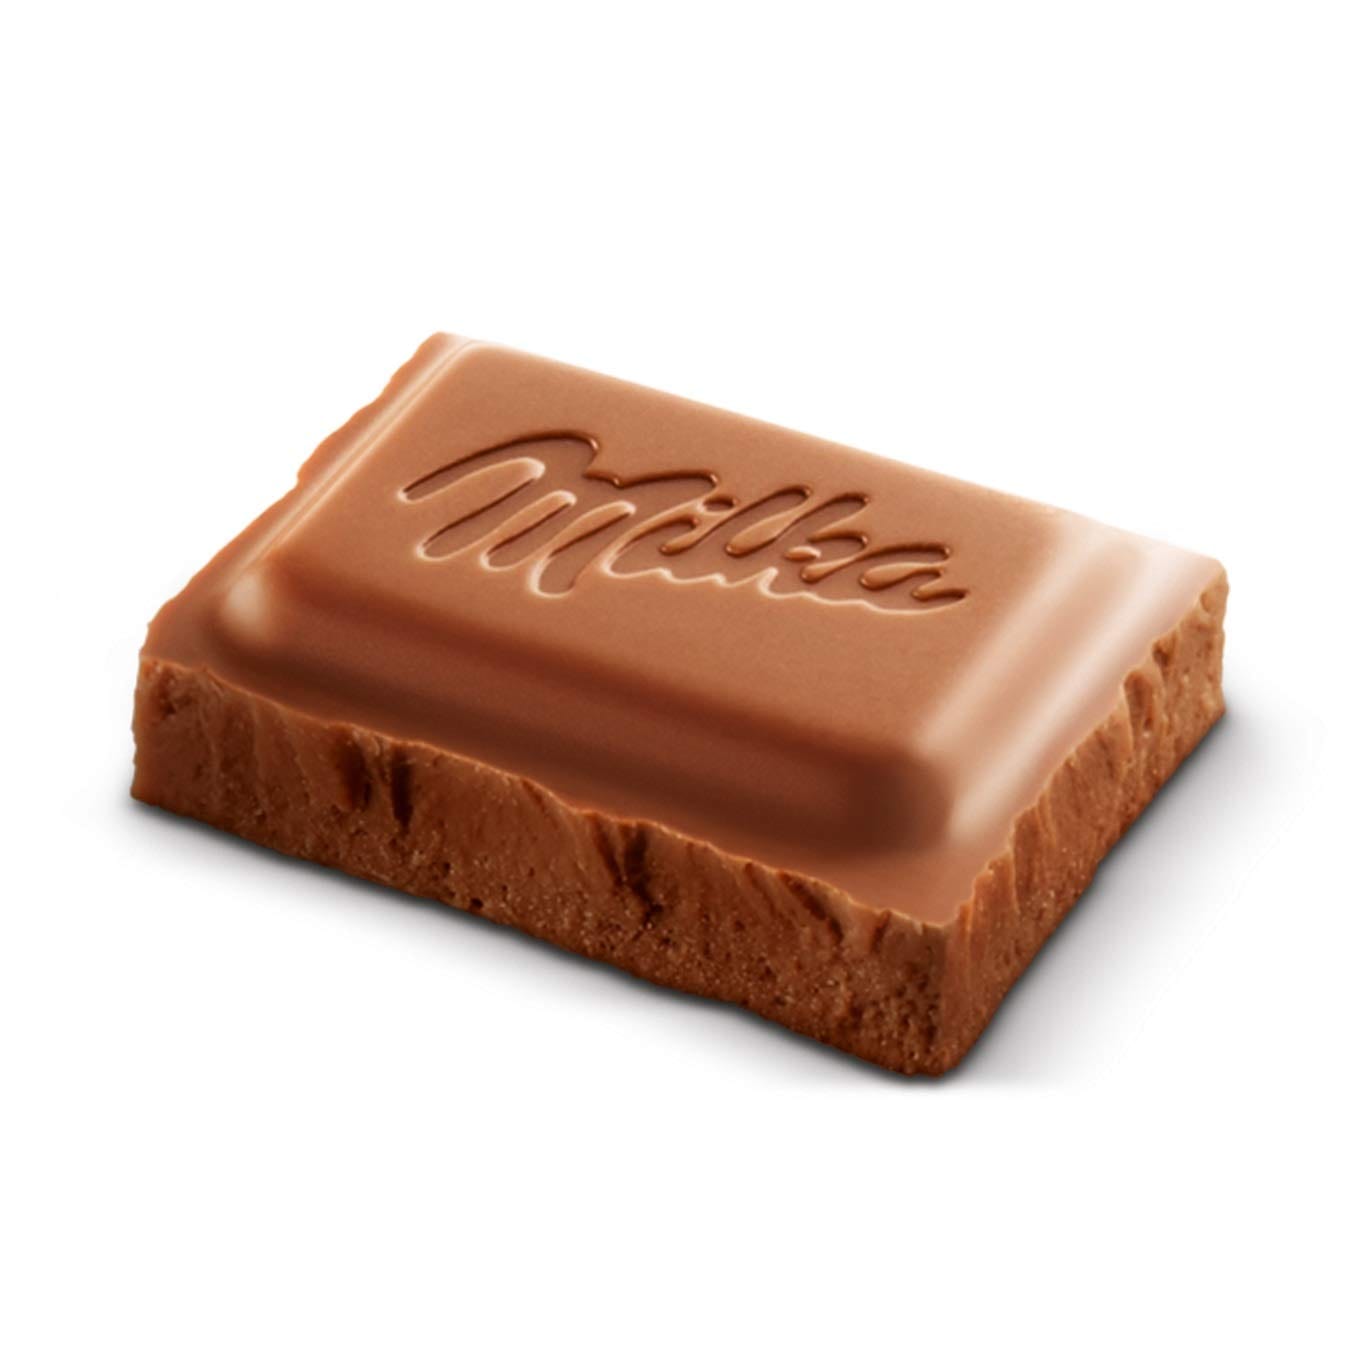 Les Bonbons de Mandy - Chocolat & Caramel - Kinder Tronky Milk X 5